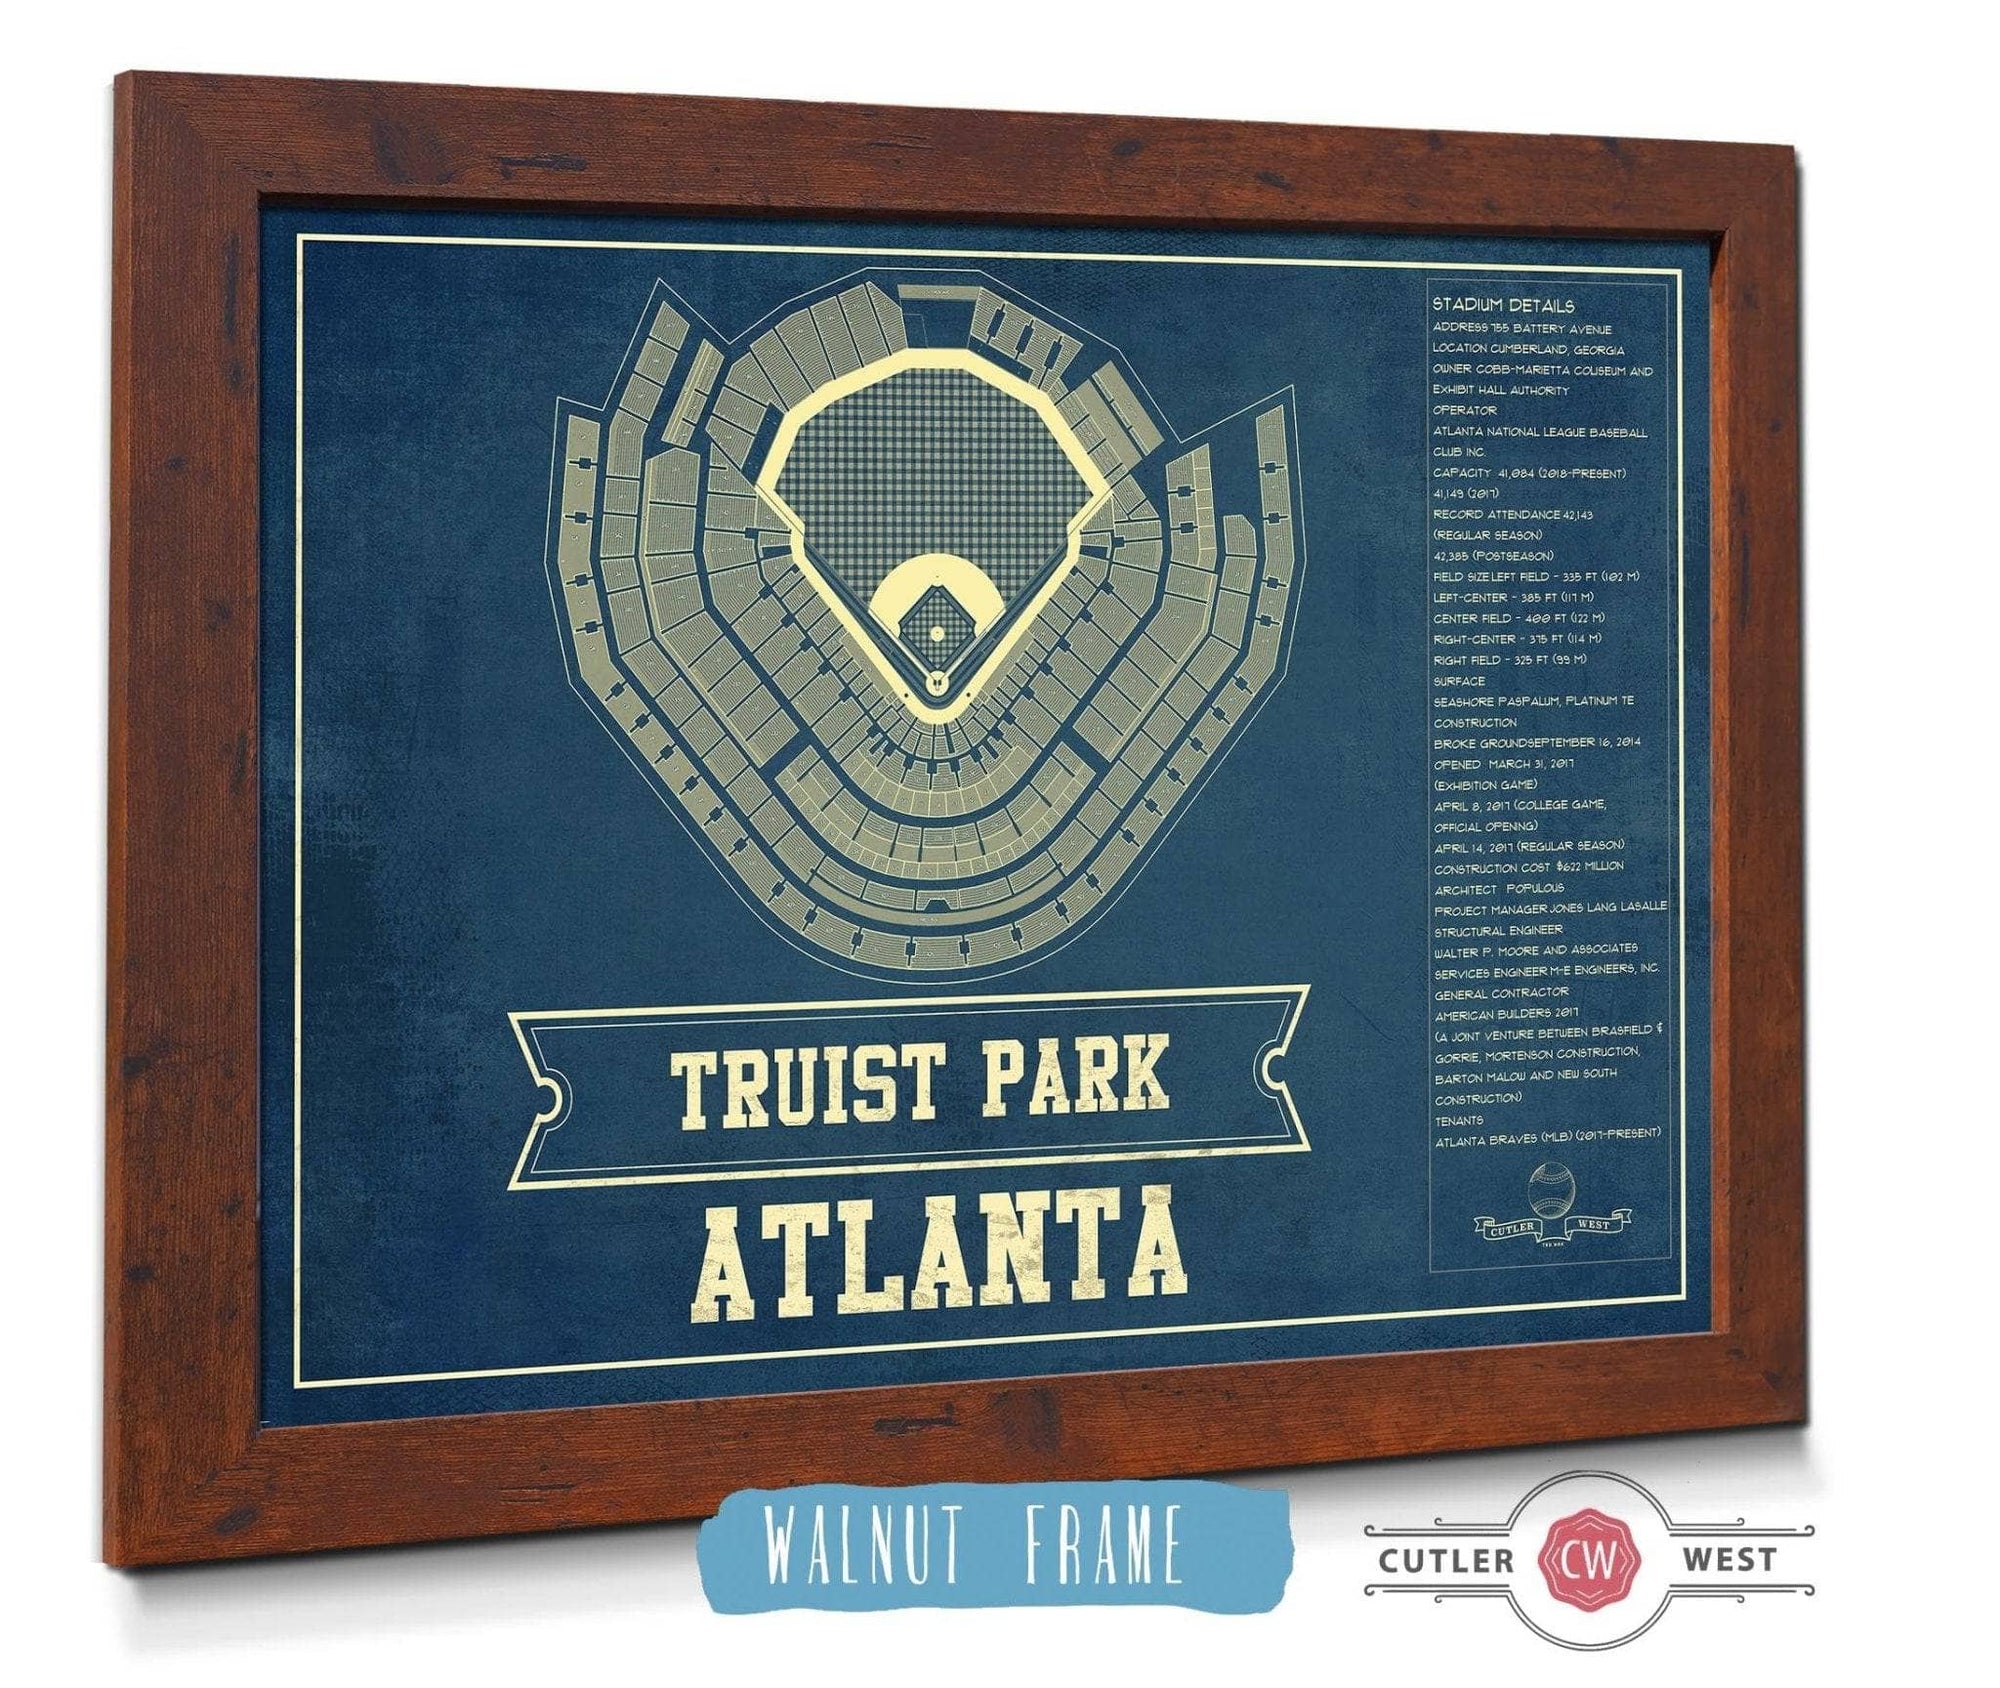 Cutler West Baseball Collection Turner Field - Atlanta Braves (MLB) Vintage Baseball Print